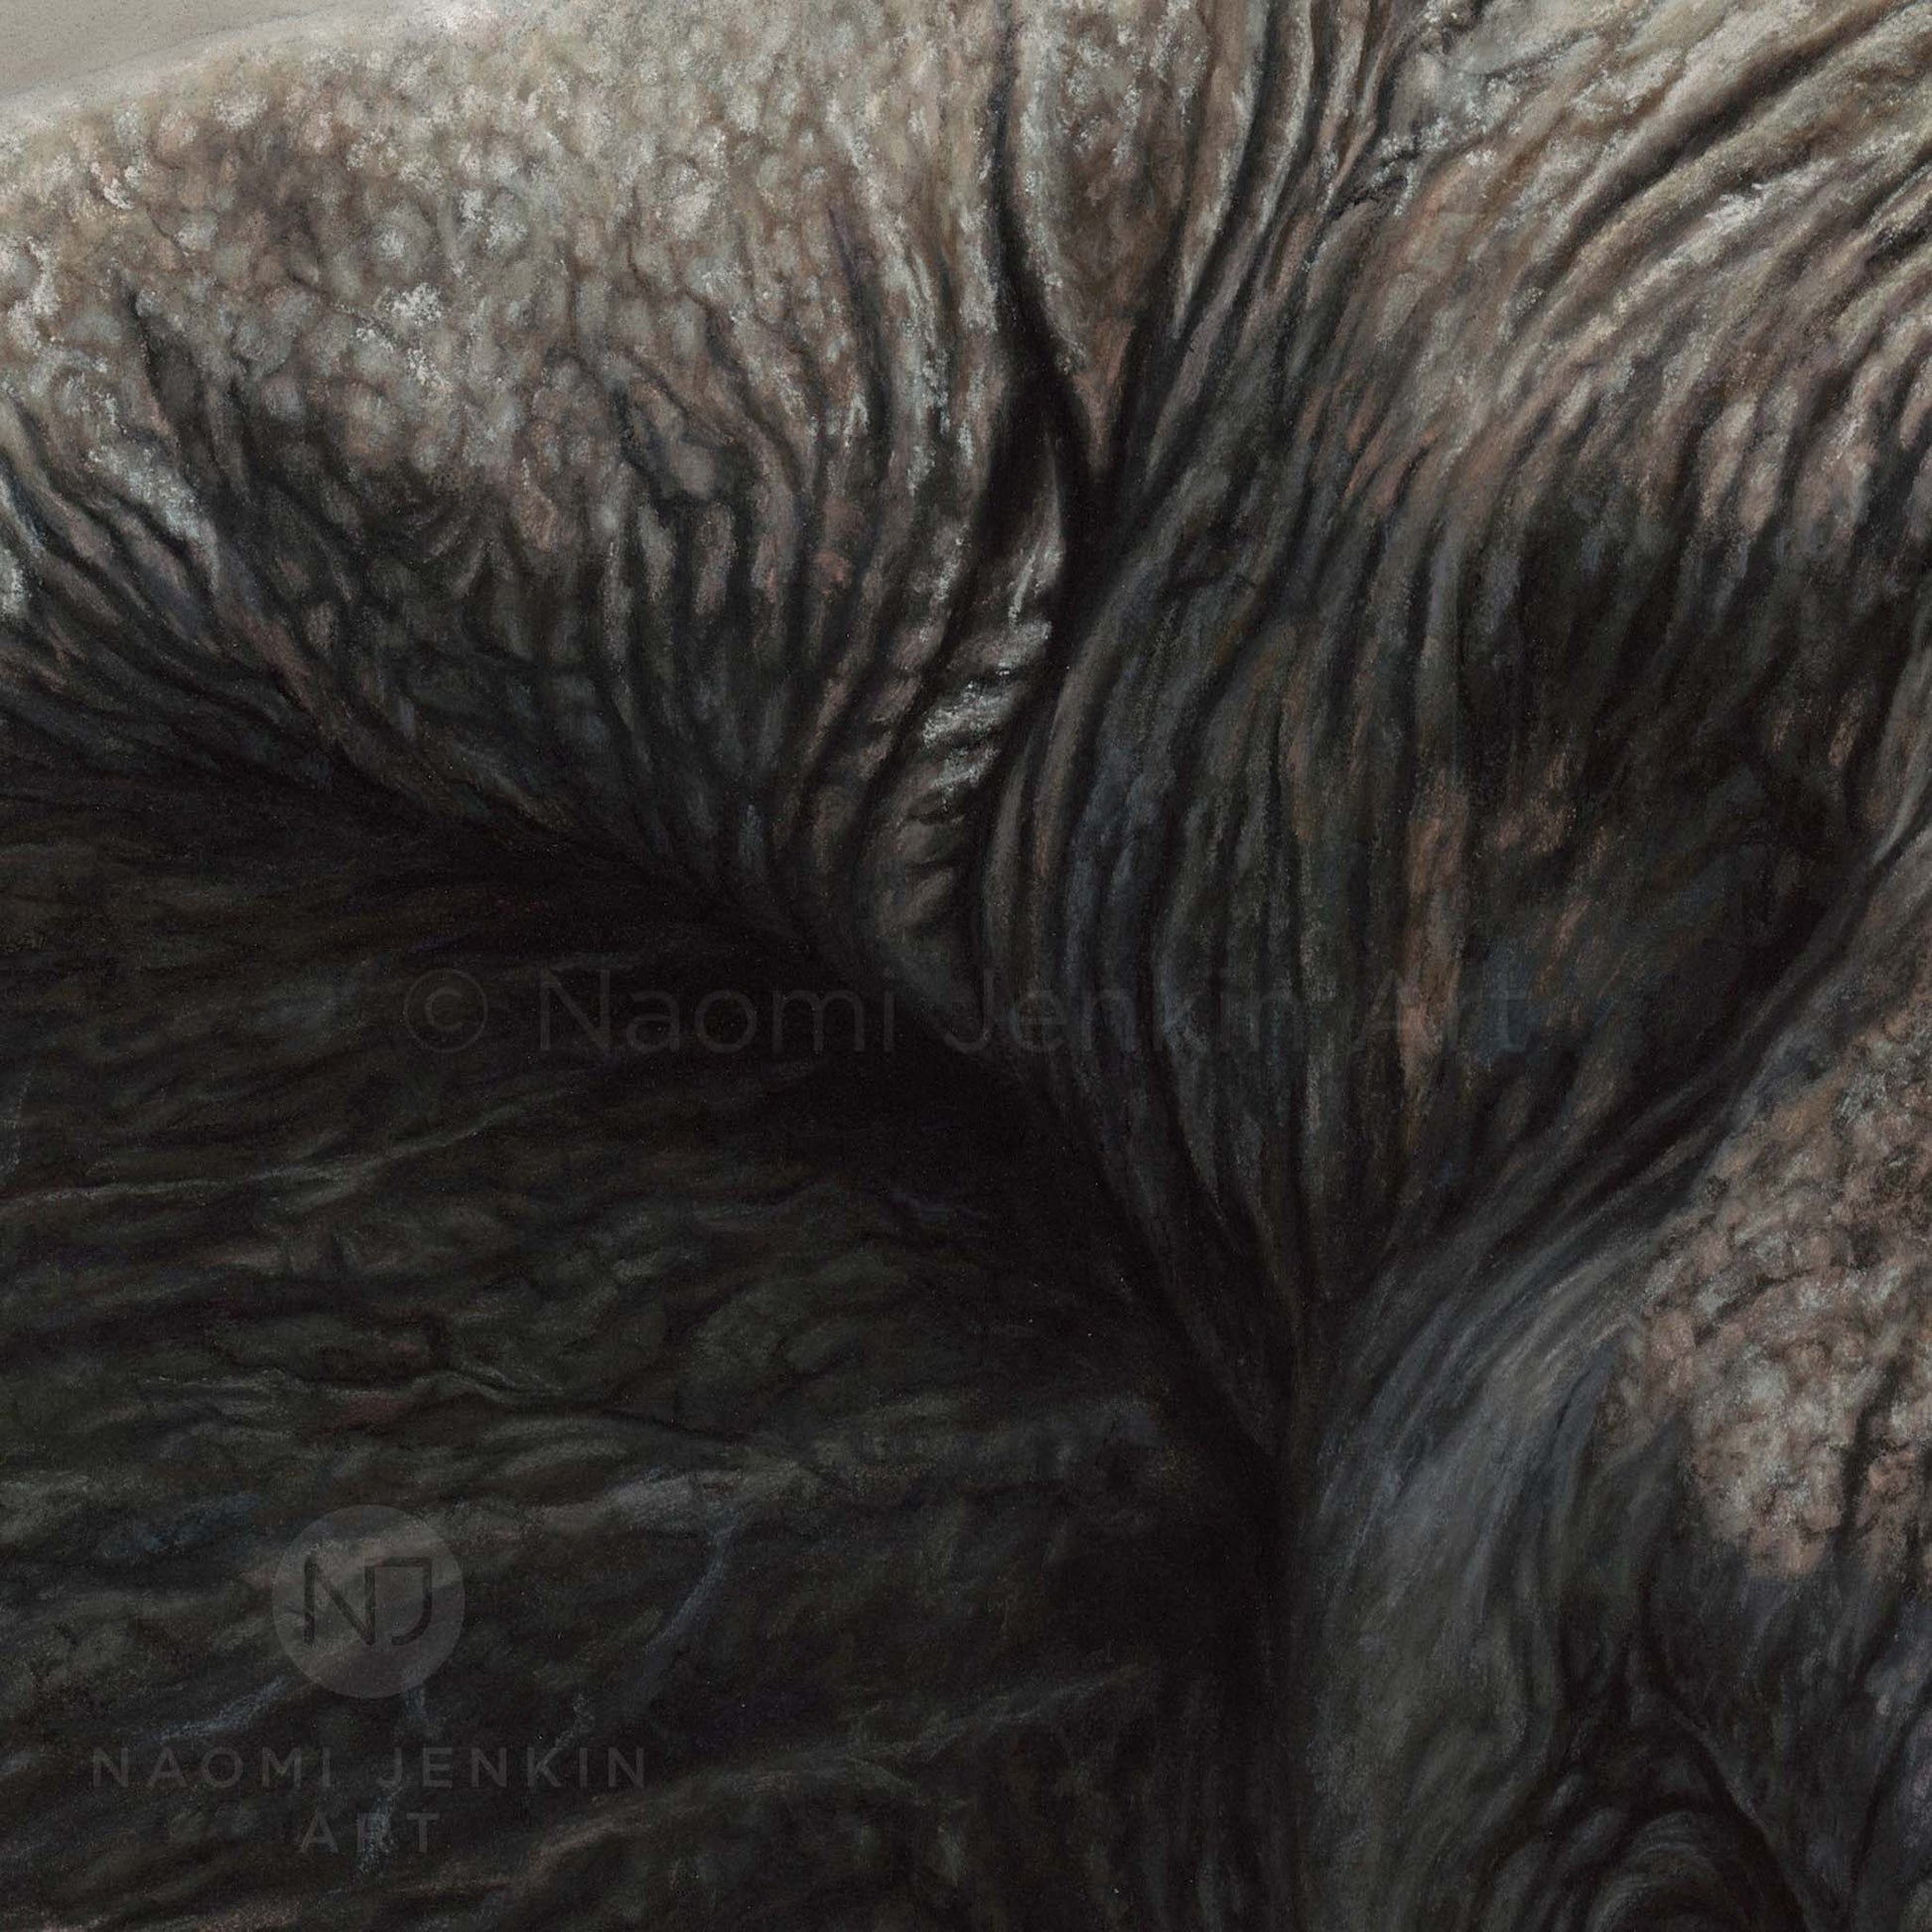 Close-up elephant artwork by Naomi Jenkin